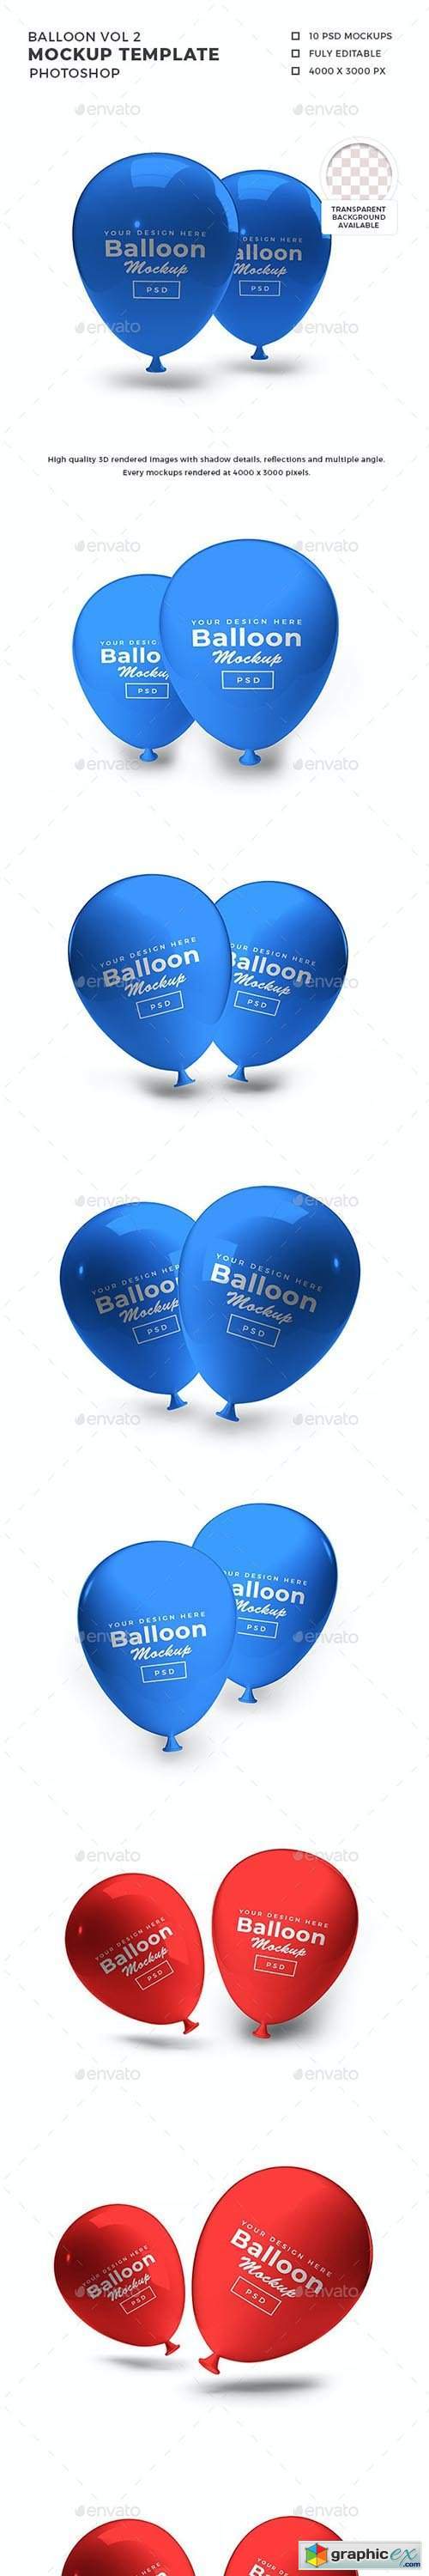 Balloon 3D Mockup Template Vol 2